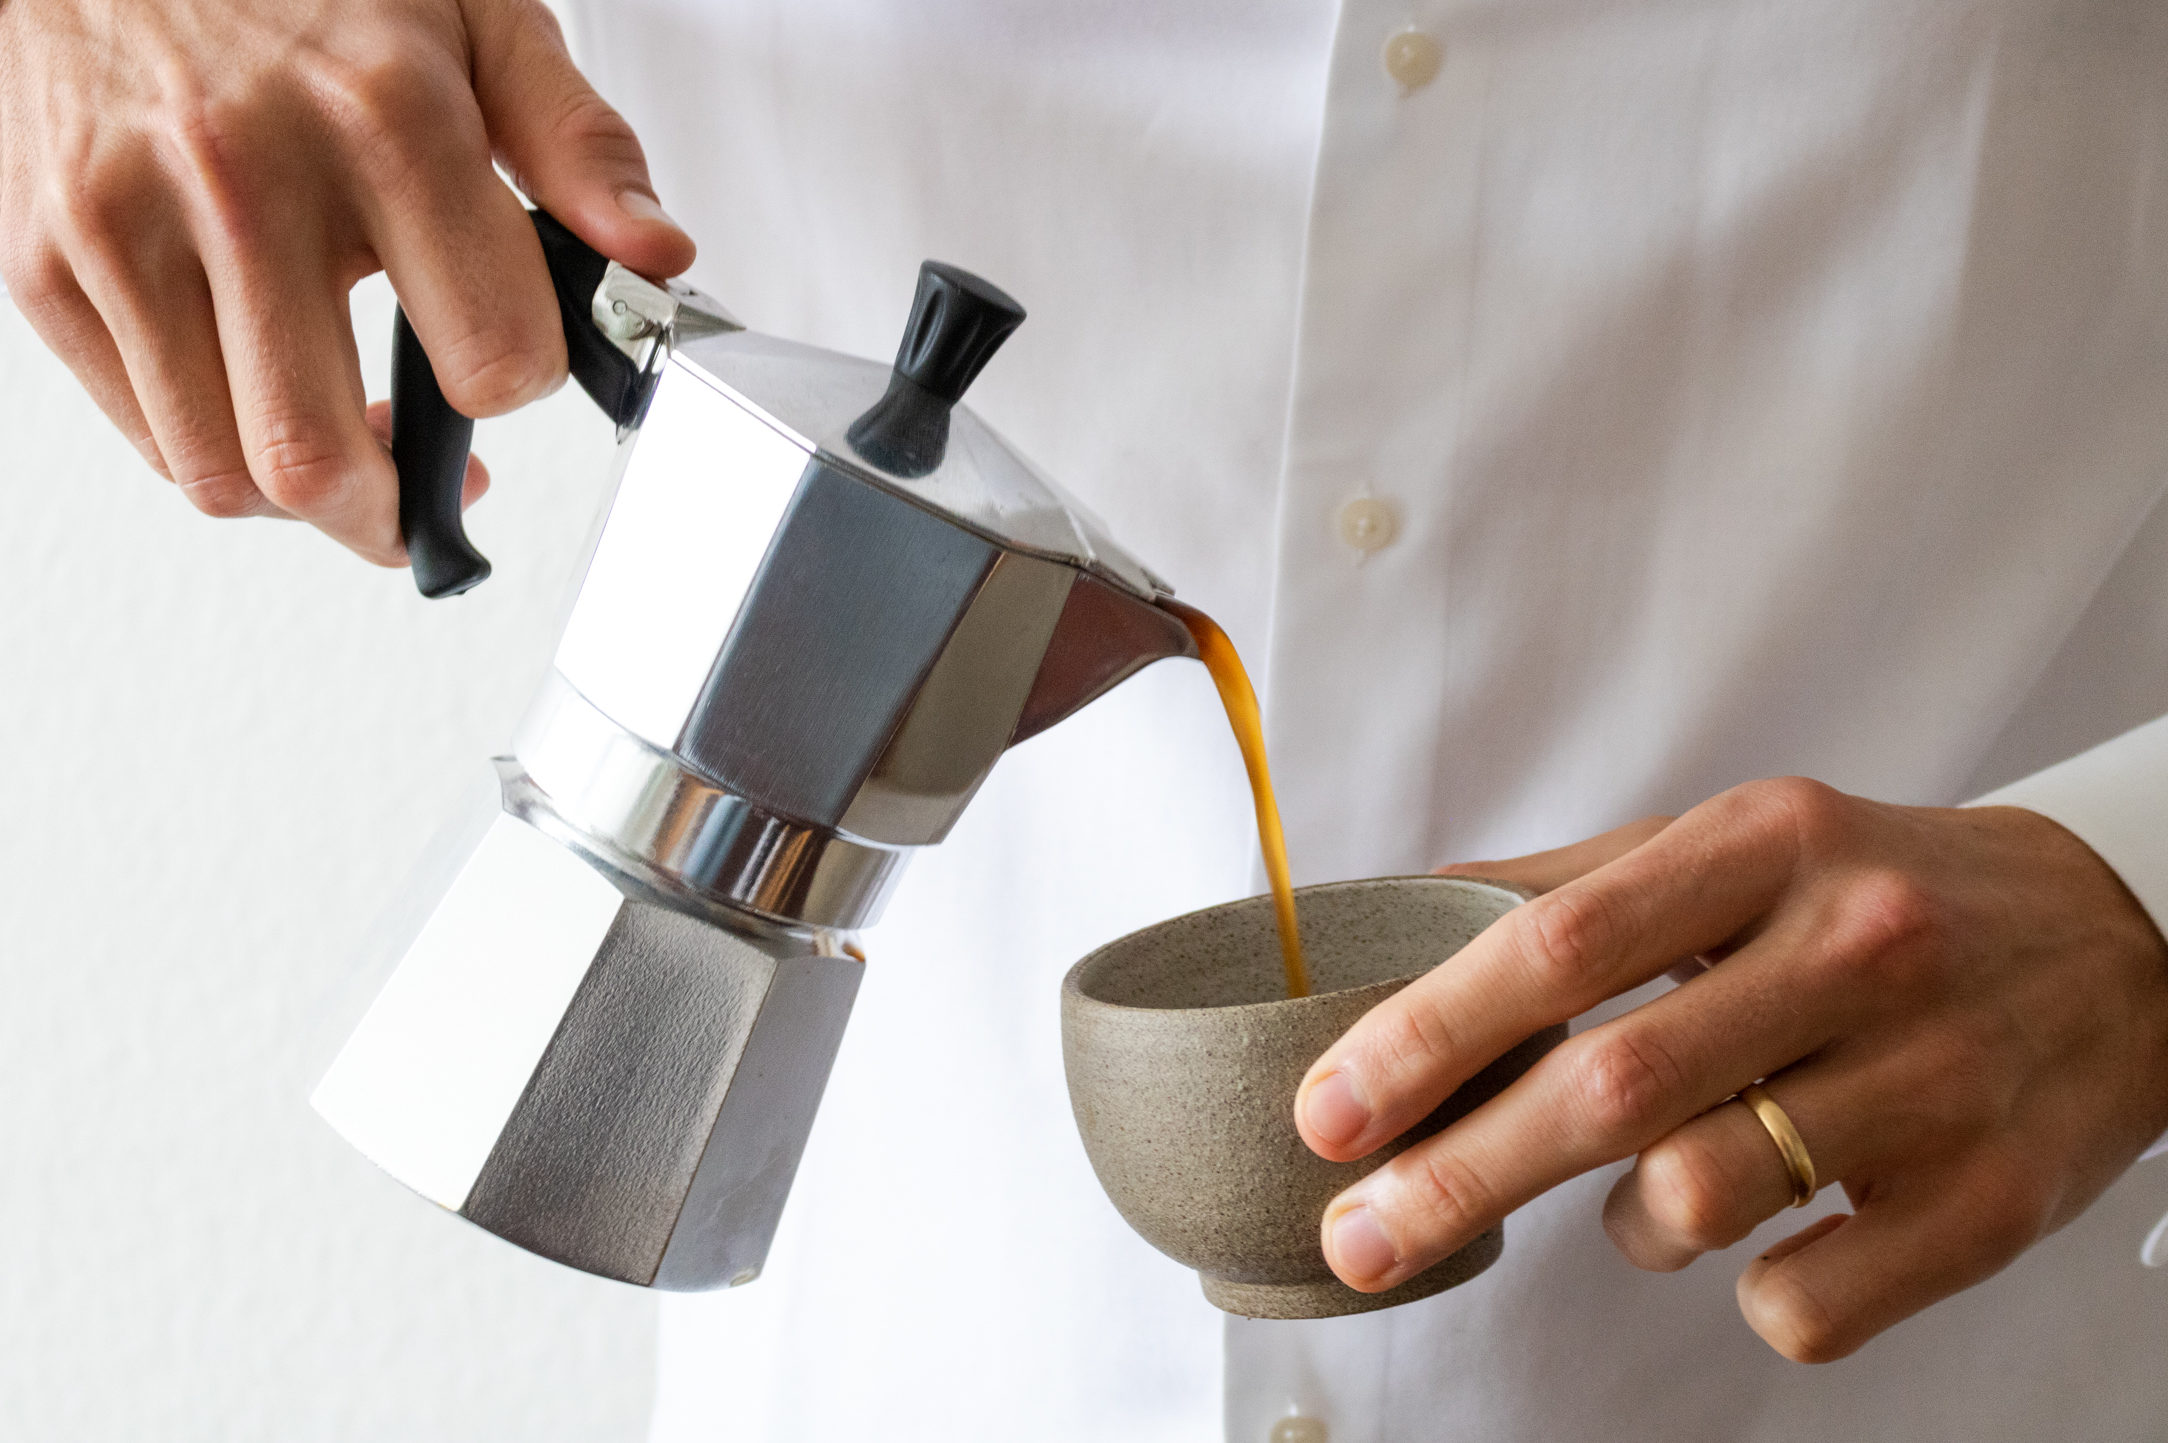 How to make coffee with moka pot